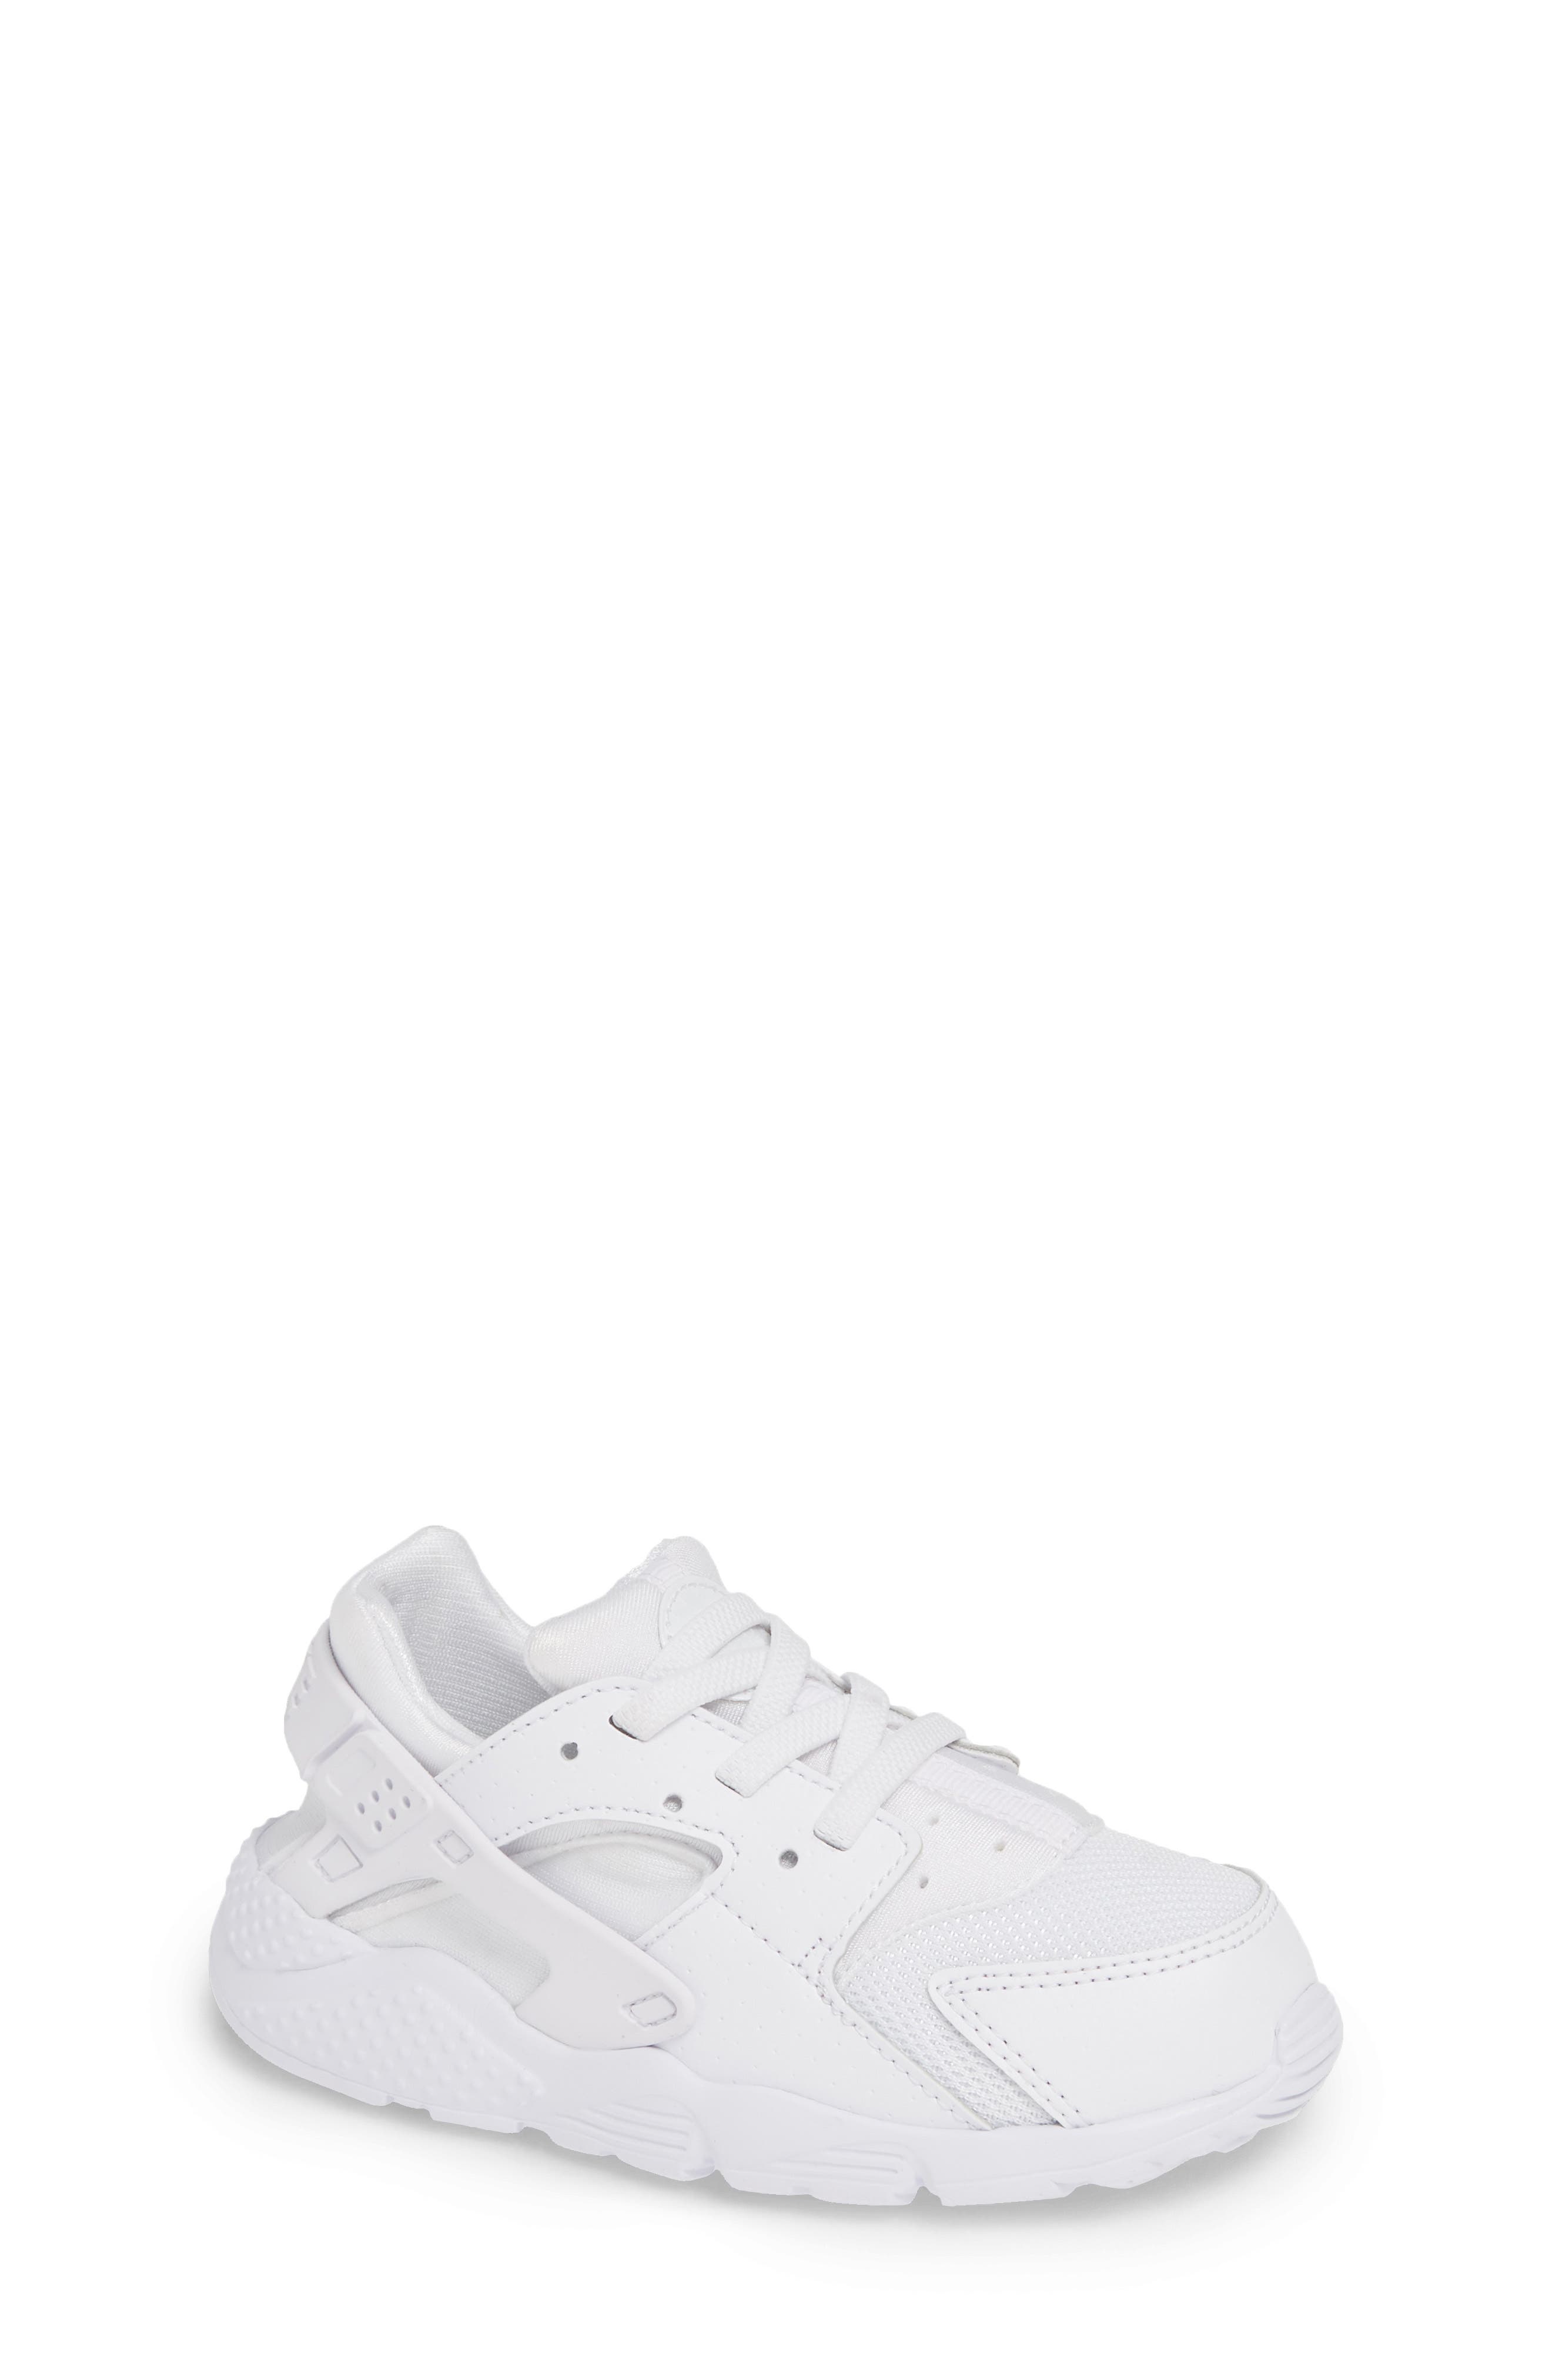 white huarache shoes